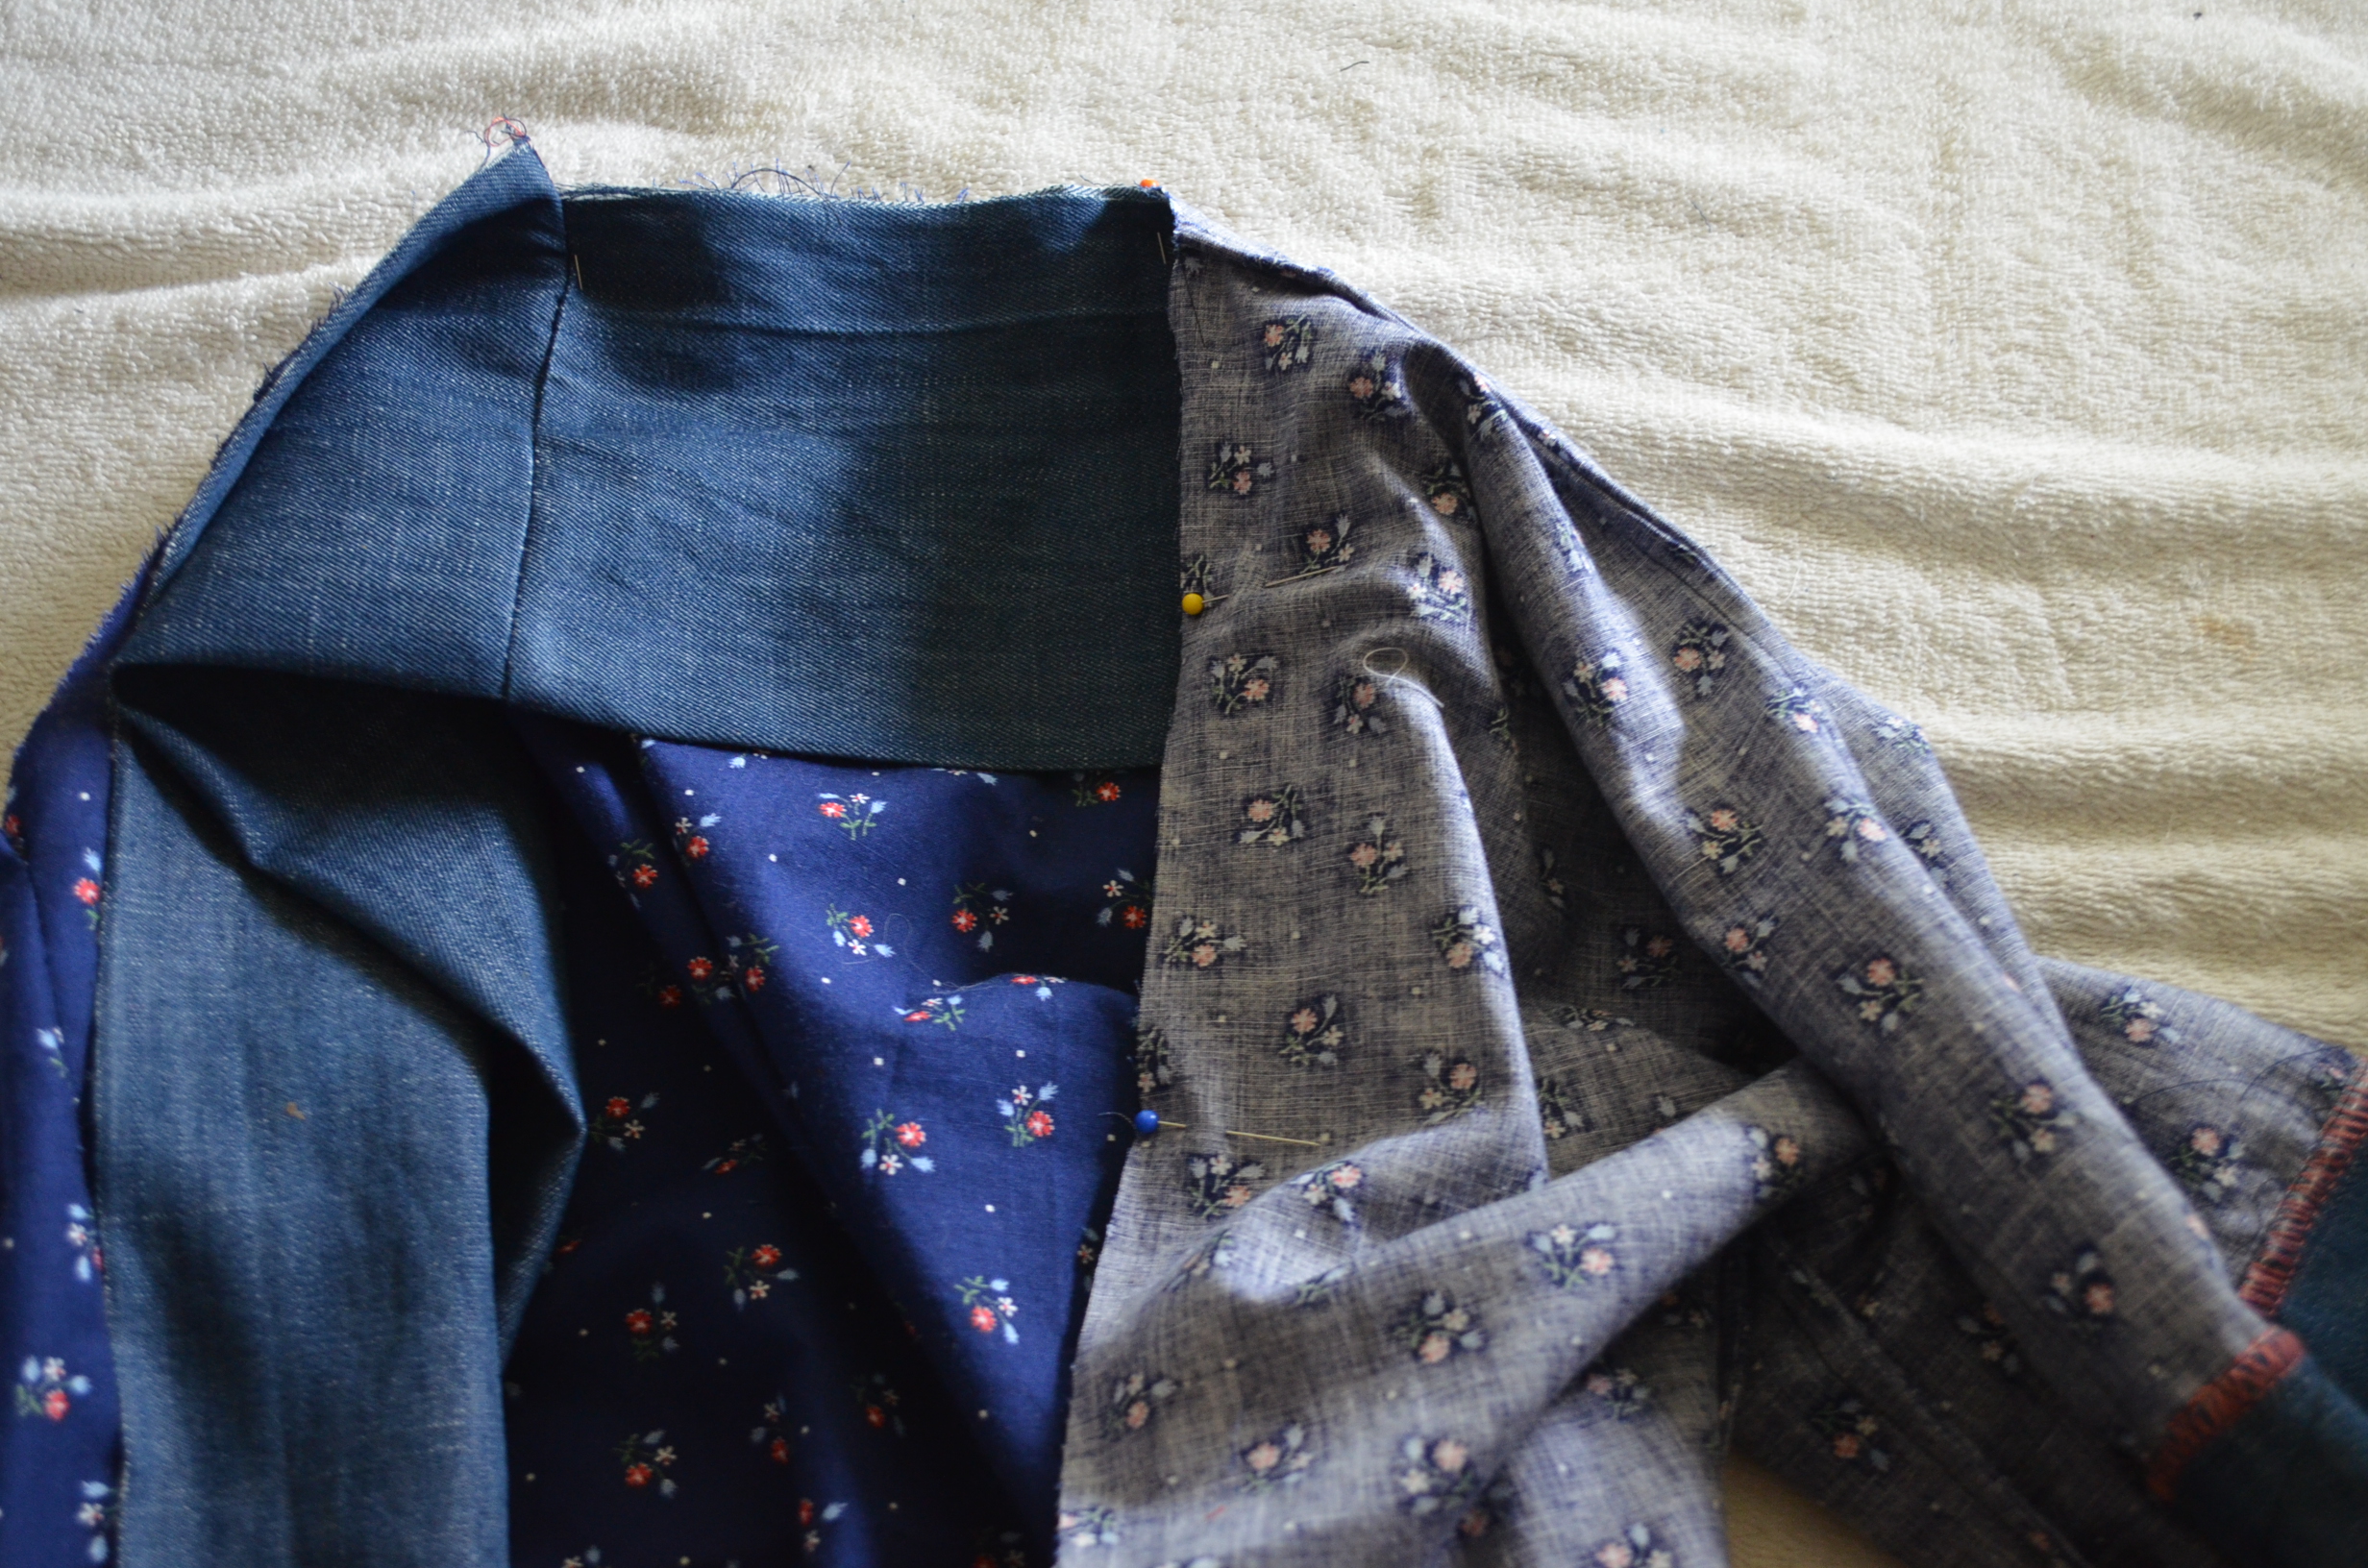 Top Kimono Sewing Patterns - A Roundup - Sew Daily